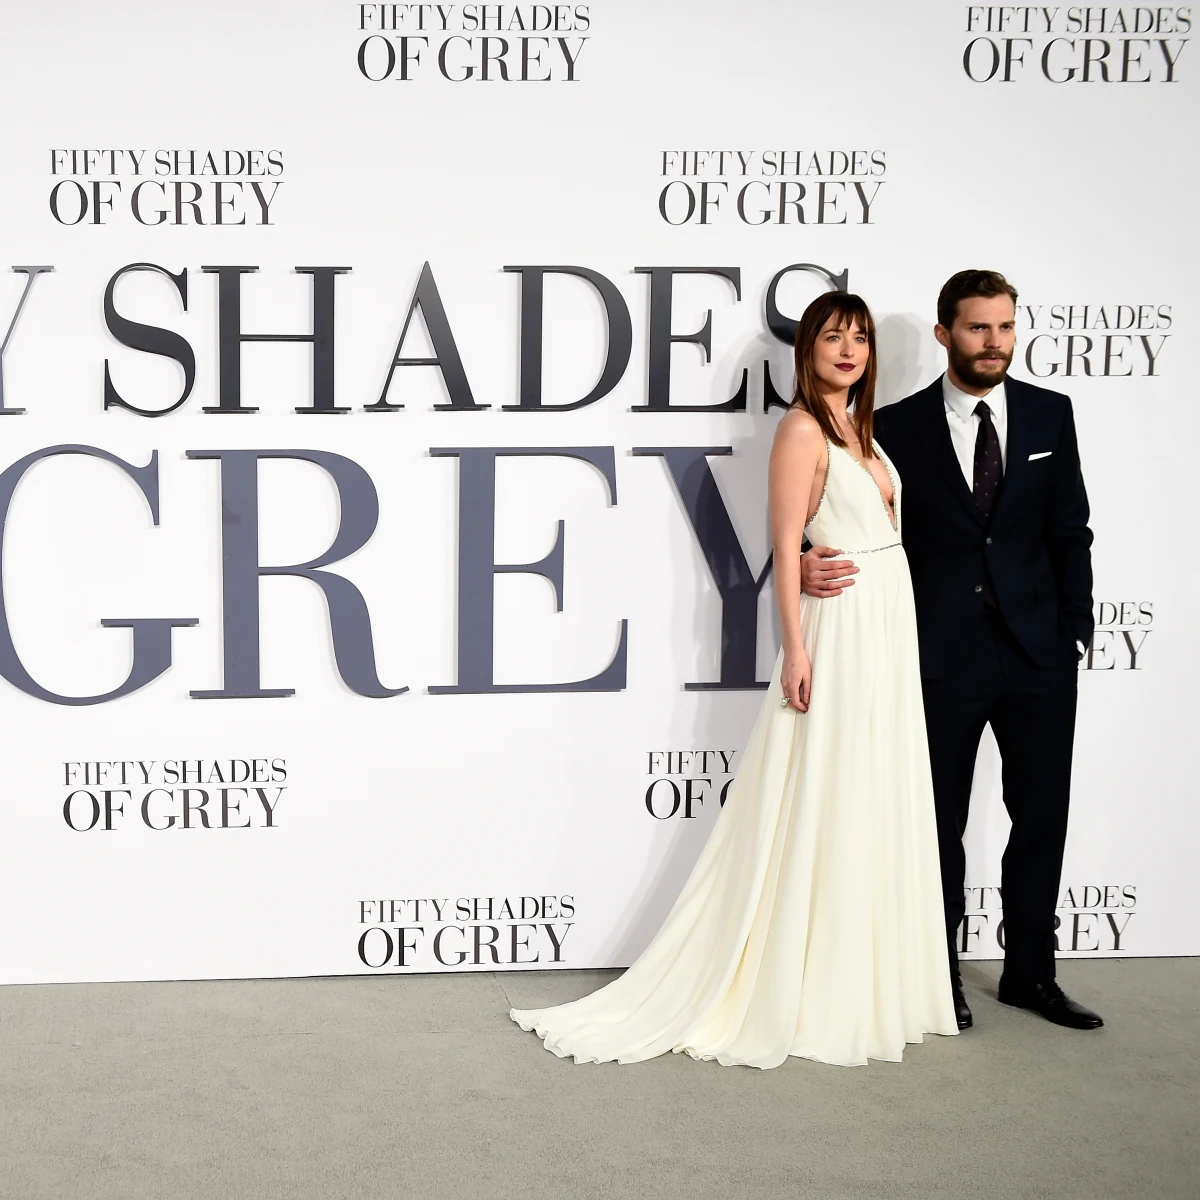 50 Shades Of Grey 4 Fifty Shades of Grey“ Teil 4: Alle Infos zur Fortsetzung